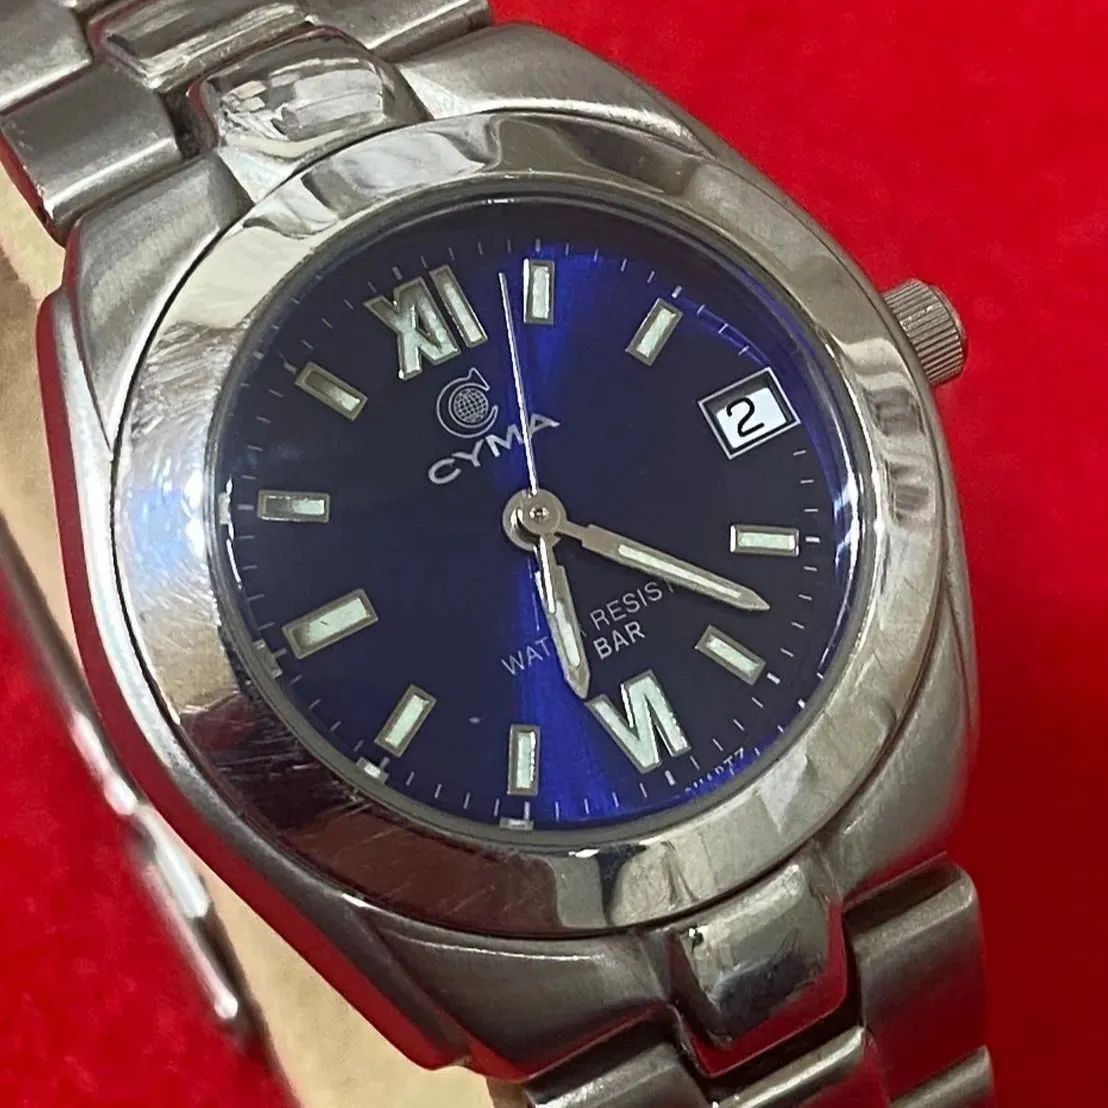 CYMA シーマ 934 メンズ グレー gray レディース 腕時計 時計 watch ブランド 高級 ヴィンテージ アンティーク 昭和 レトロ  とけい ウオッチ watch ブランド 高級腕時計 シルバー silver 銀 銀色 金属ベルト - メルカリ